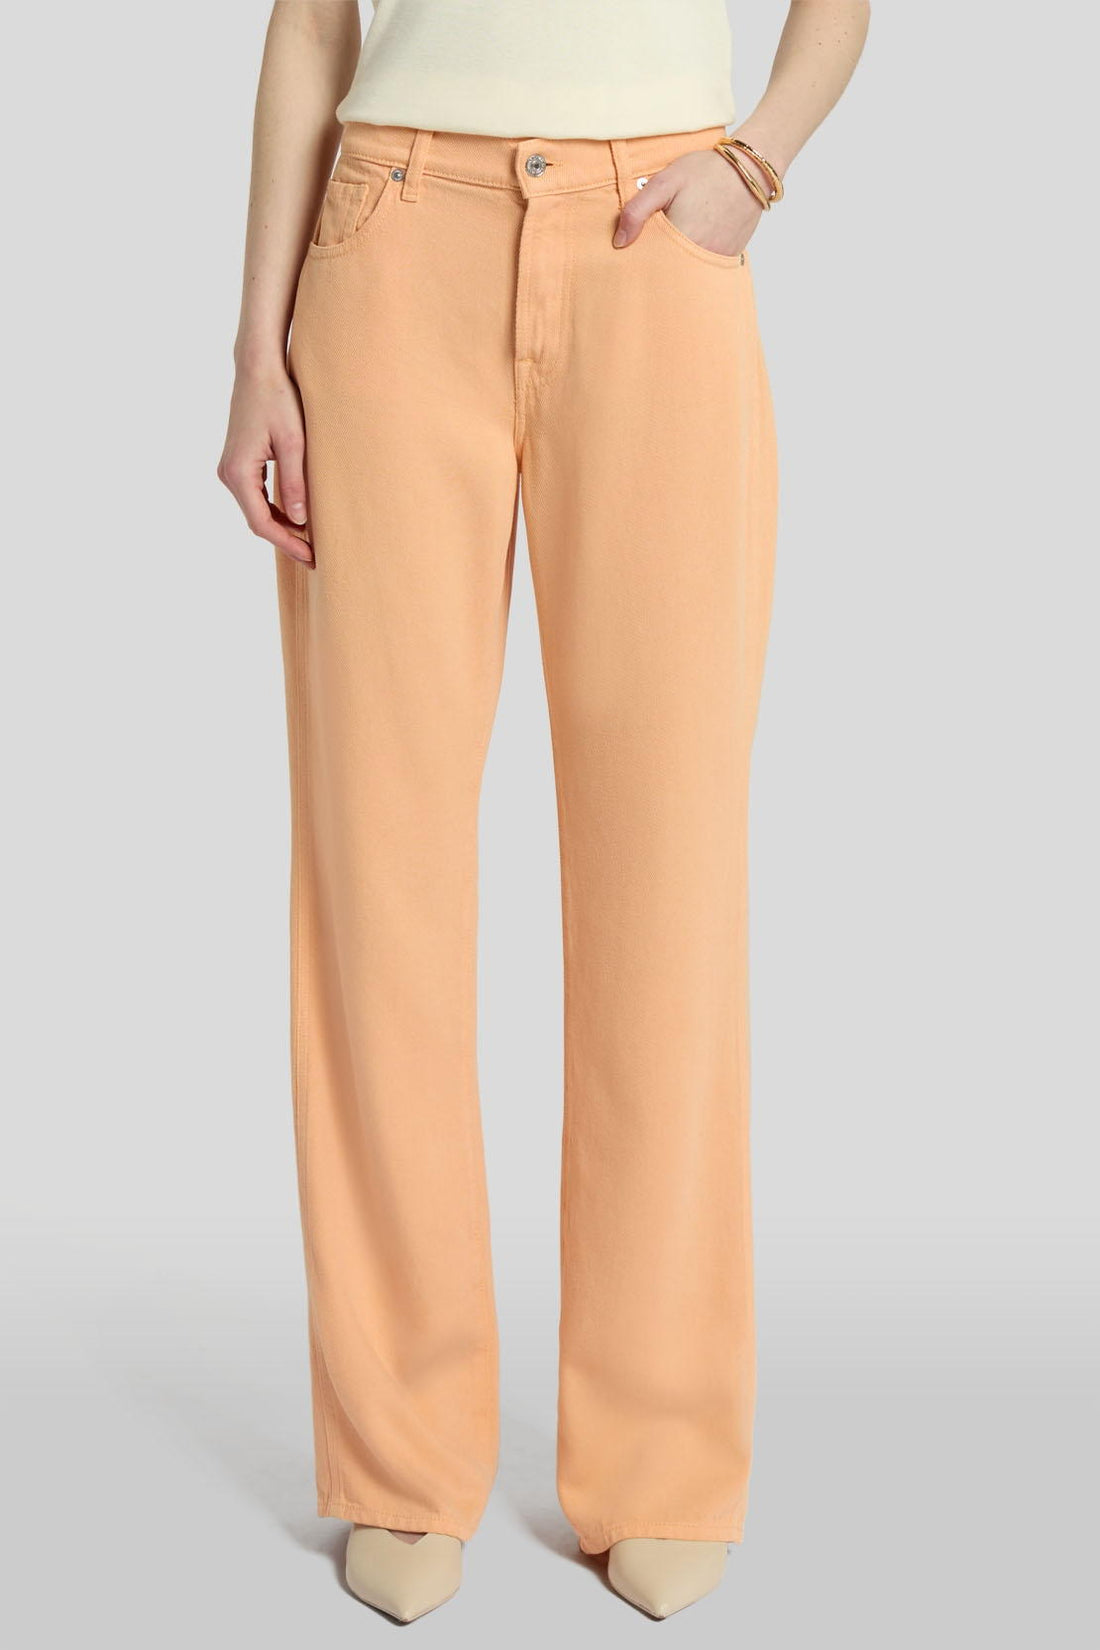 Tess Trouser Colored Tencel Peach_JSSTC850GF_GF_02